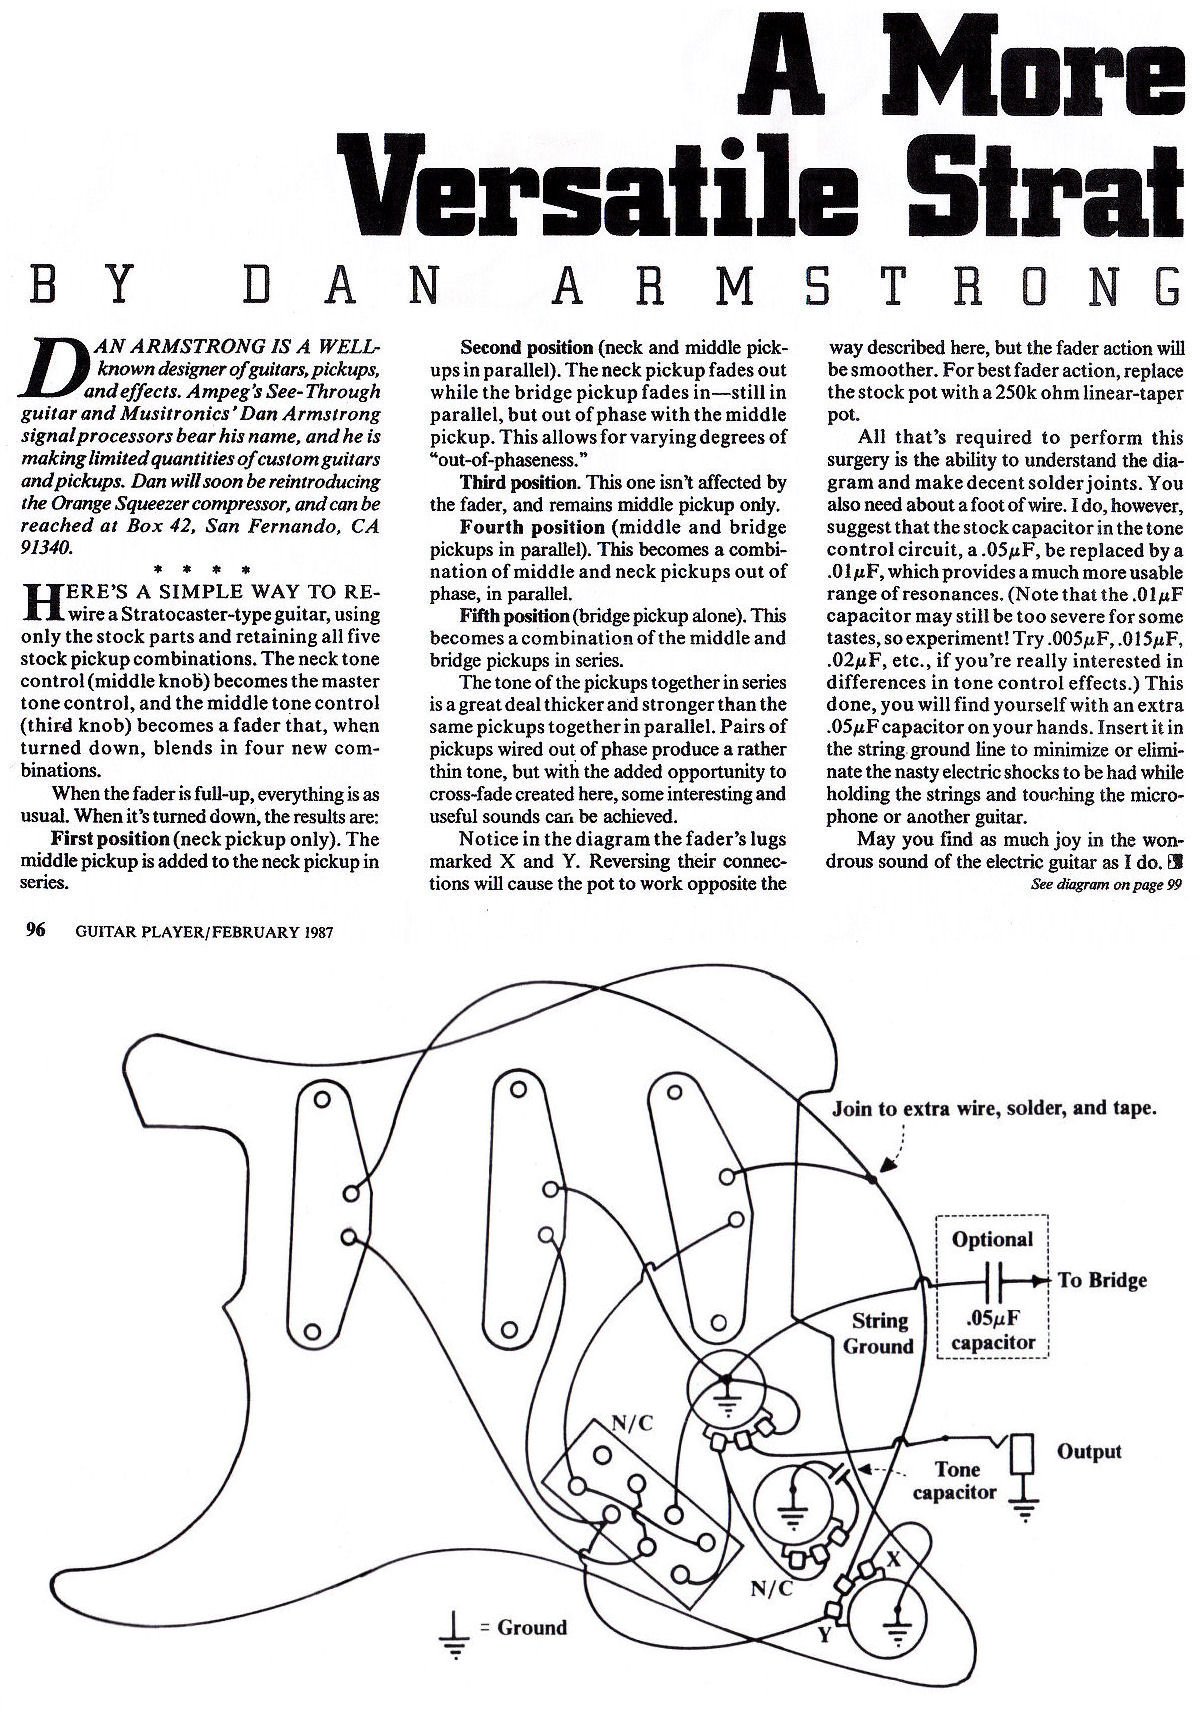 Wiring Dan Armstrong